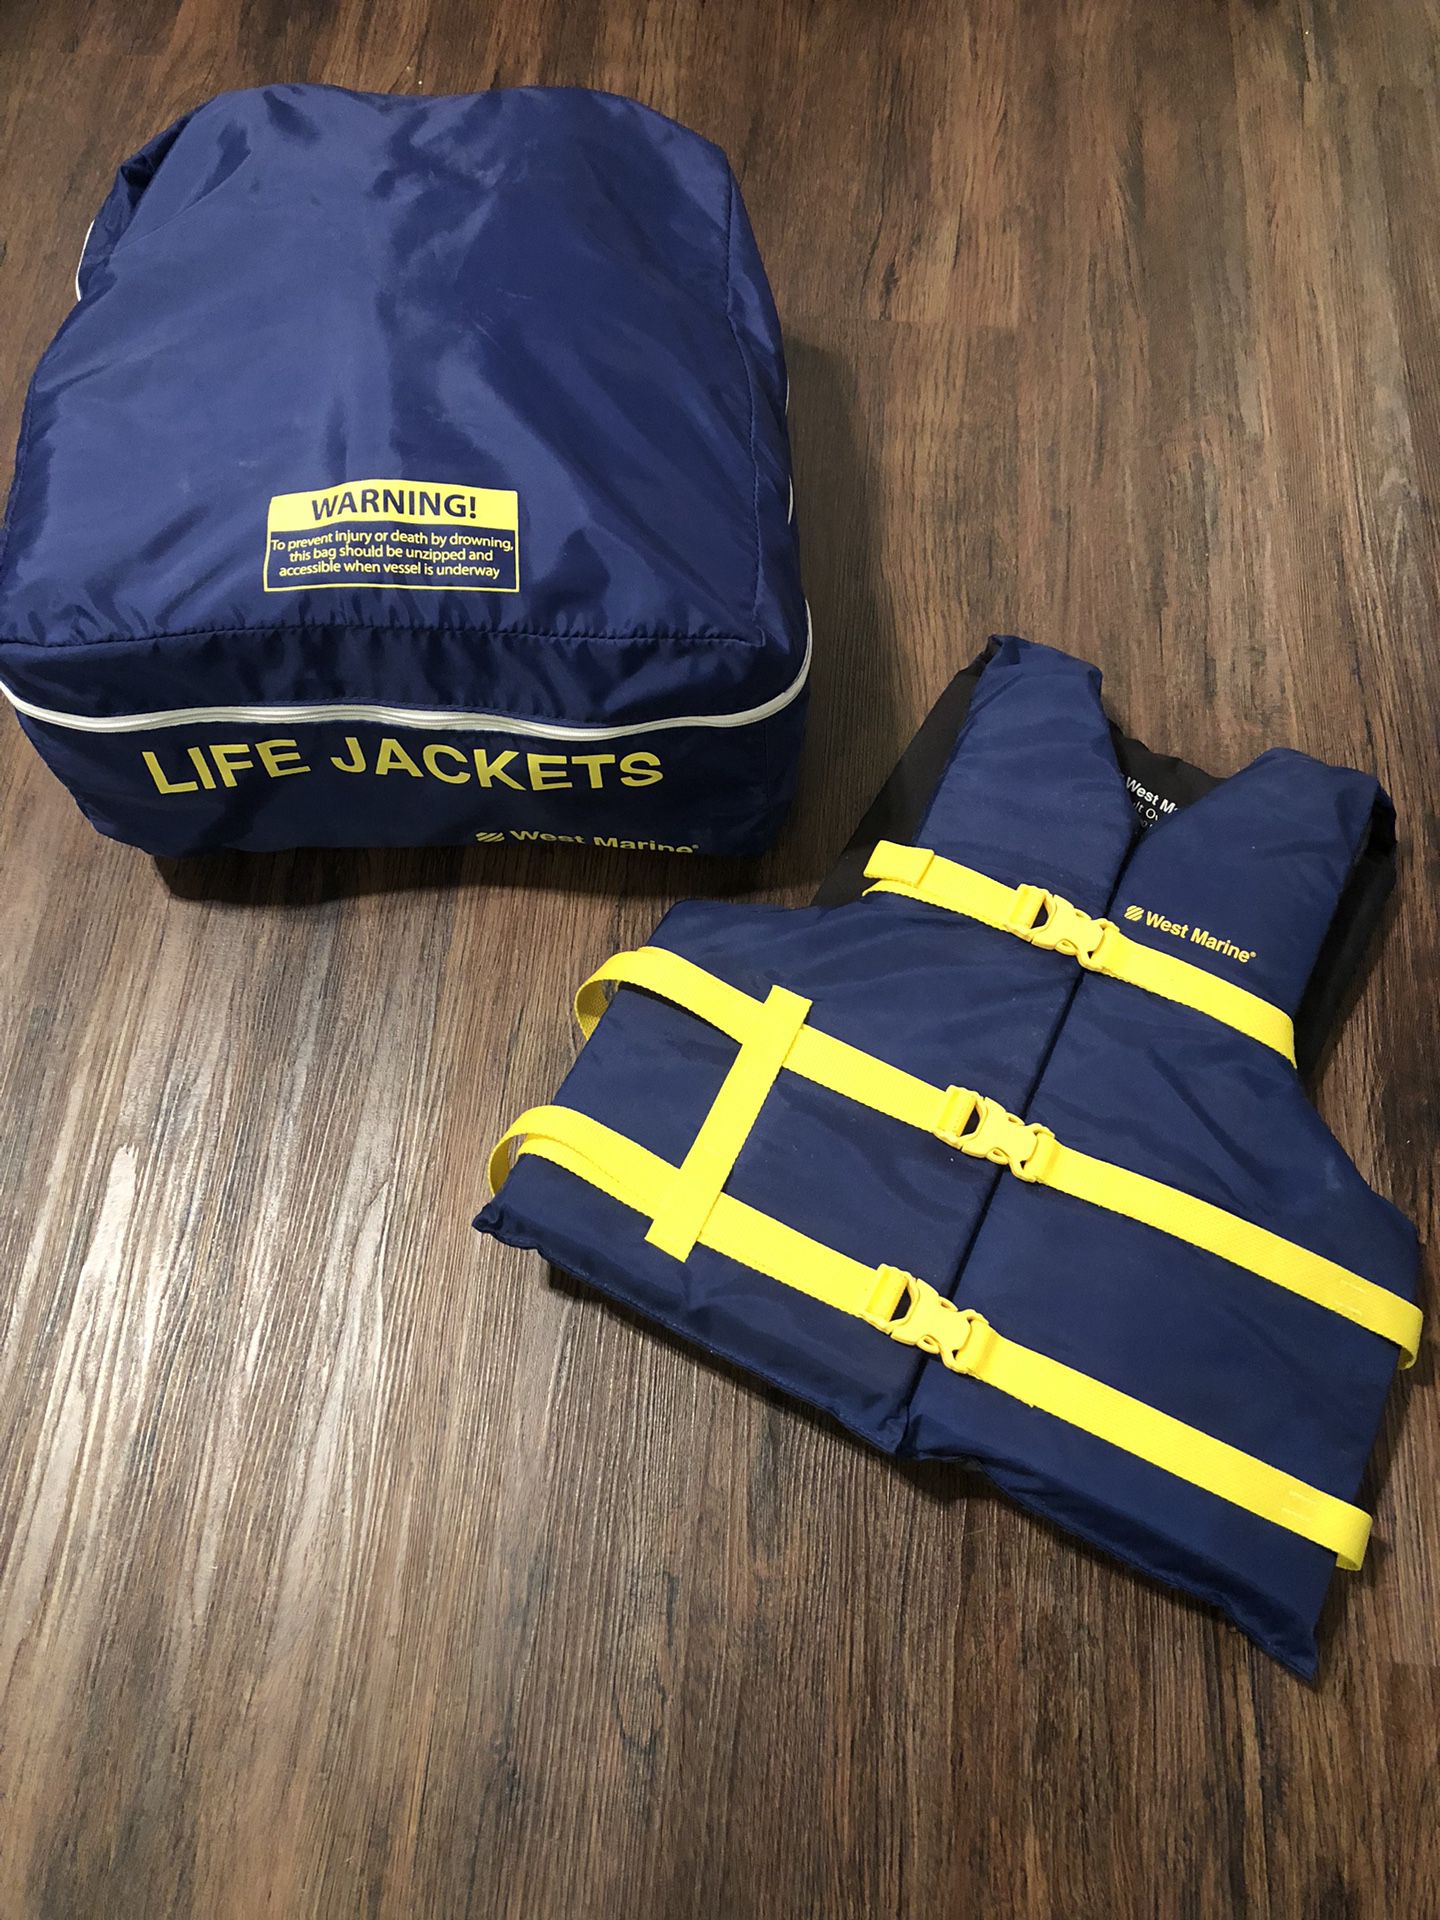 4 West Marine Runabout Life Jackets